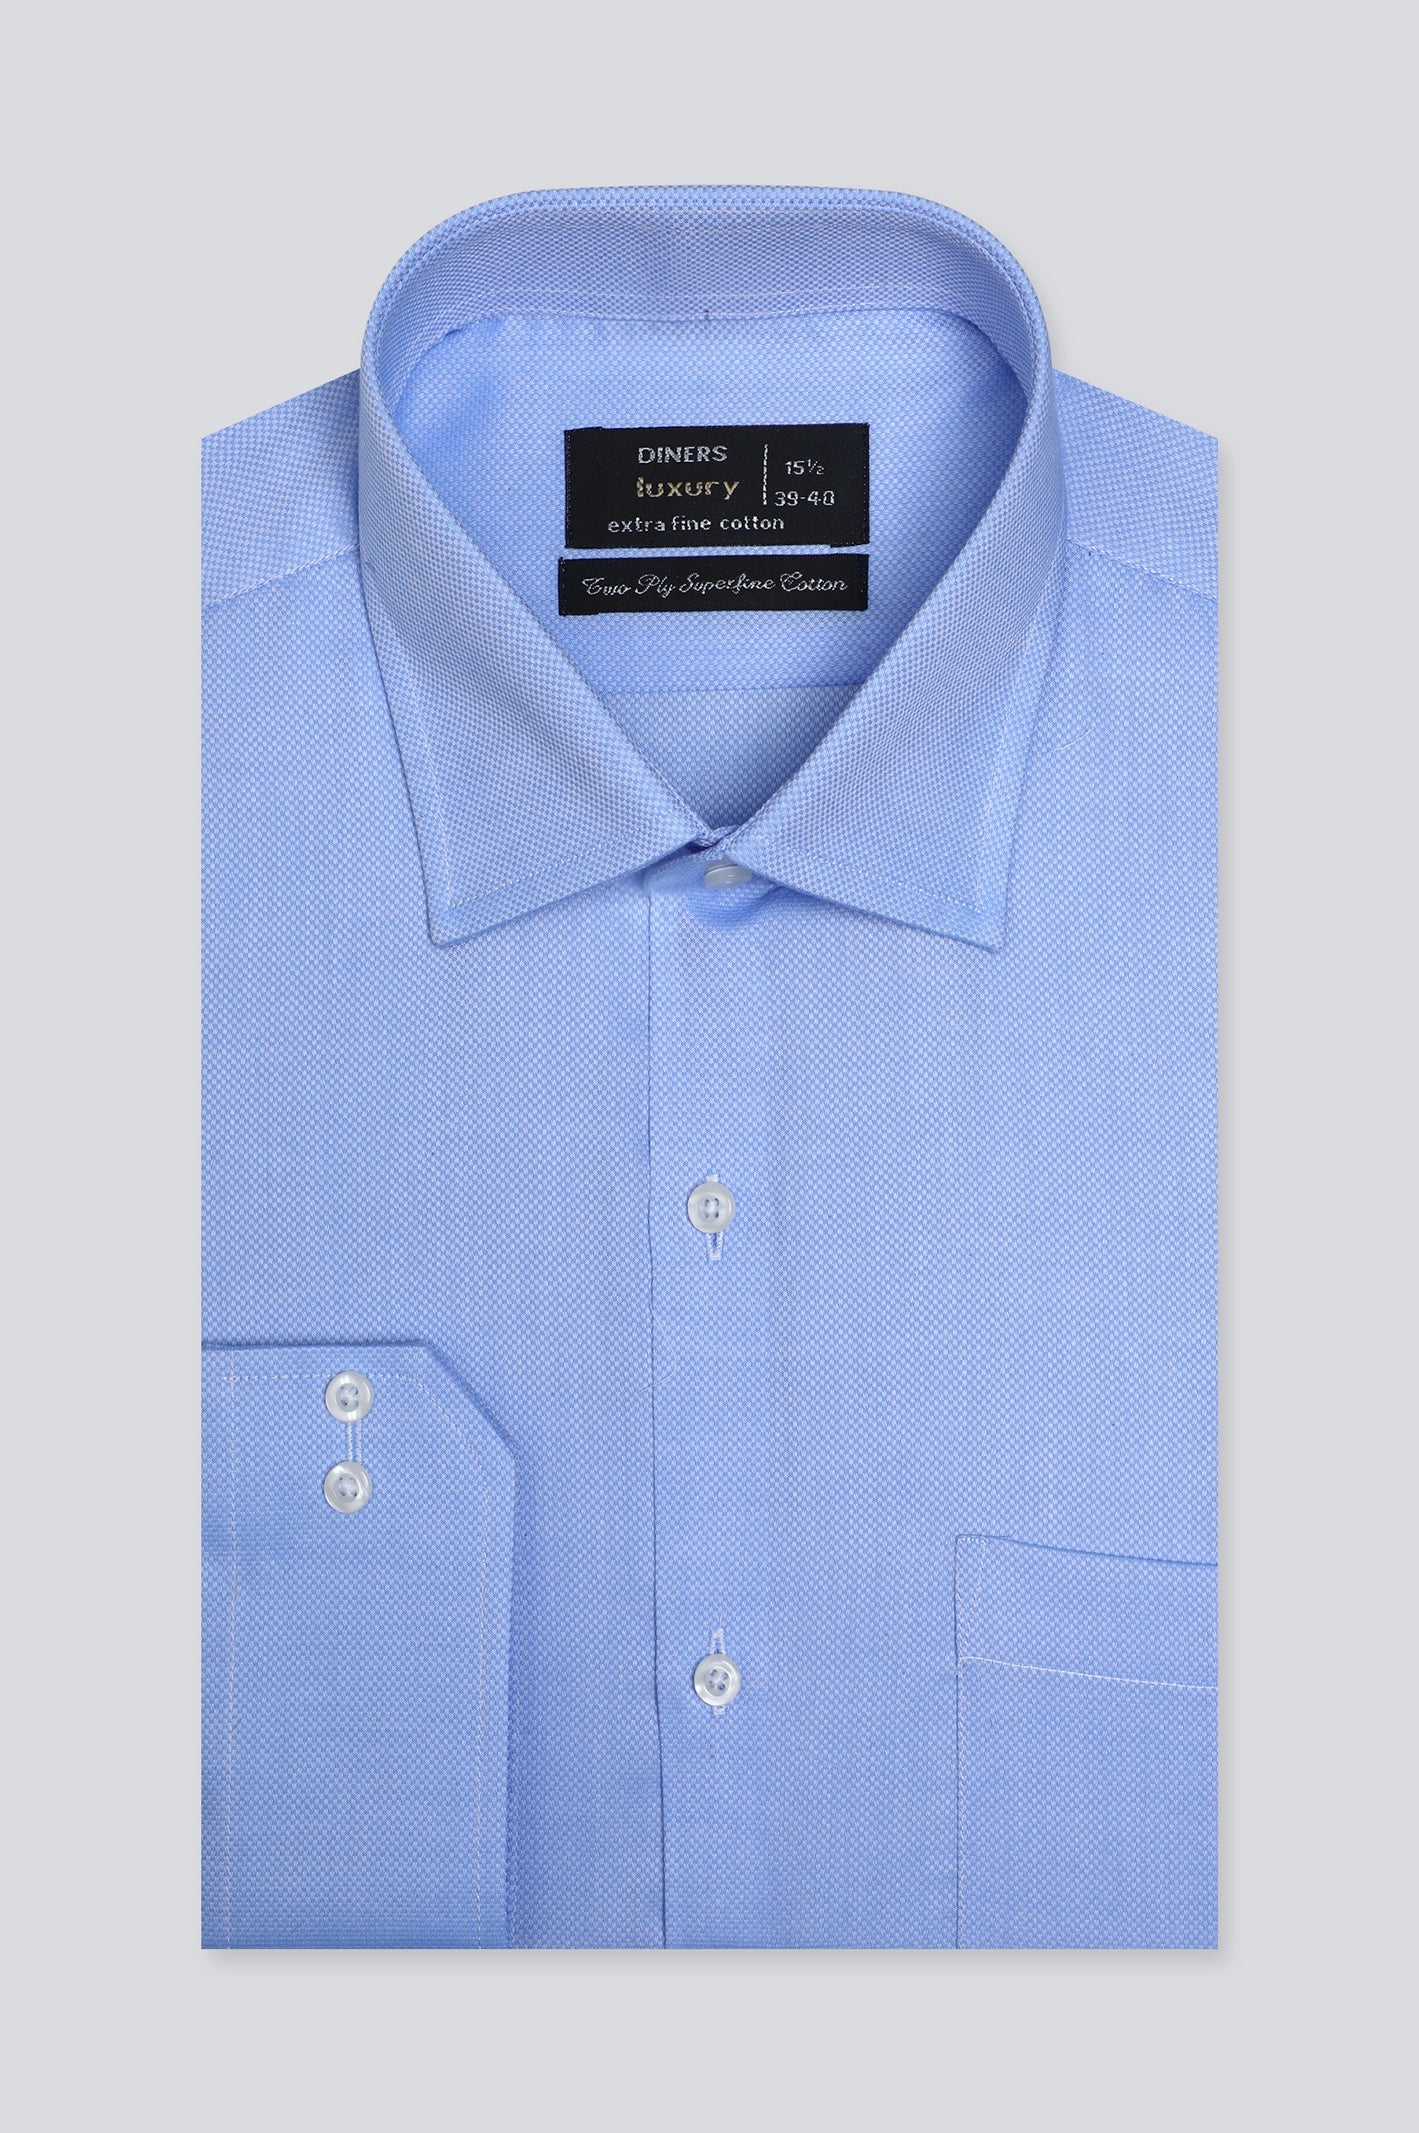 Light Blue Texture Formal Shirt For Men - Diners